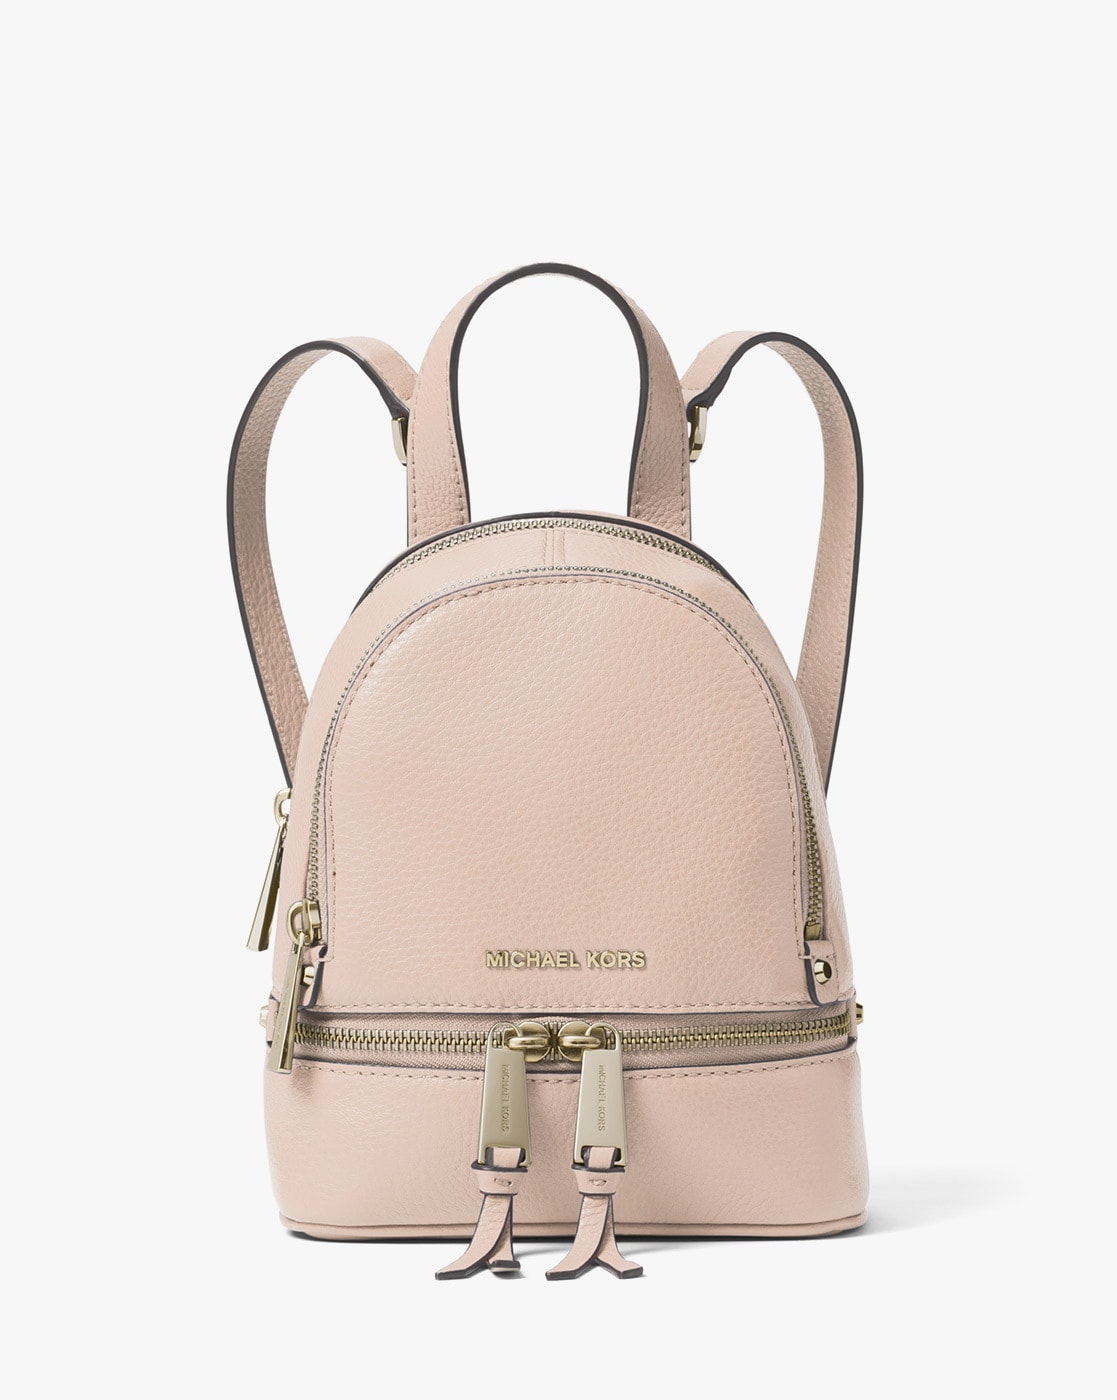 Buy Pink Backpacks for Women by Michael Kors Online